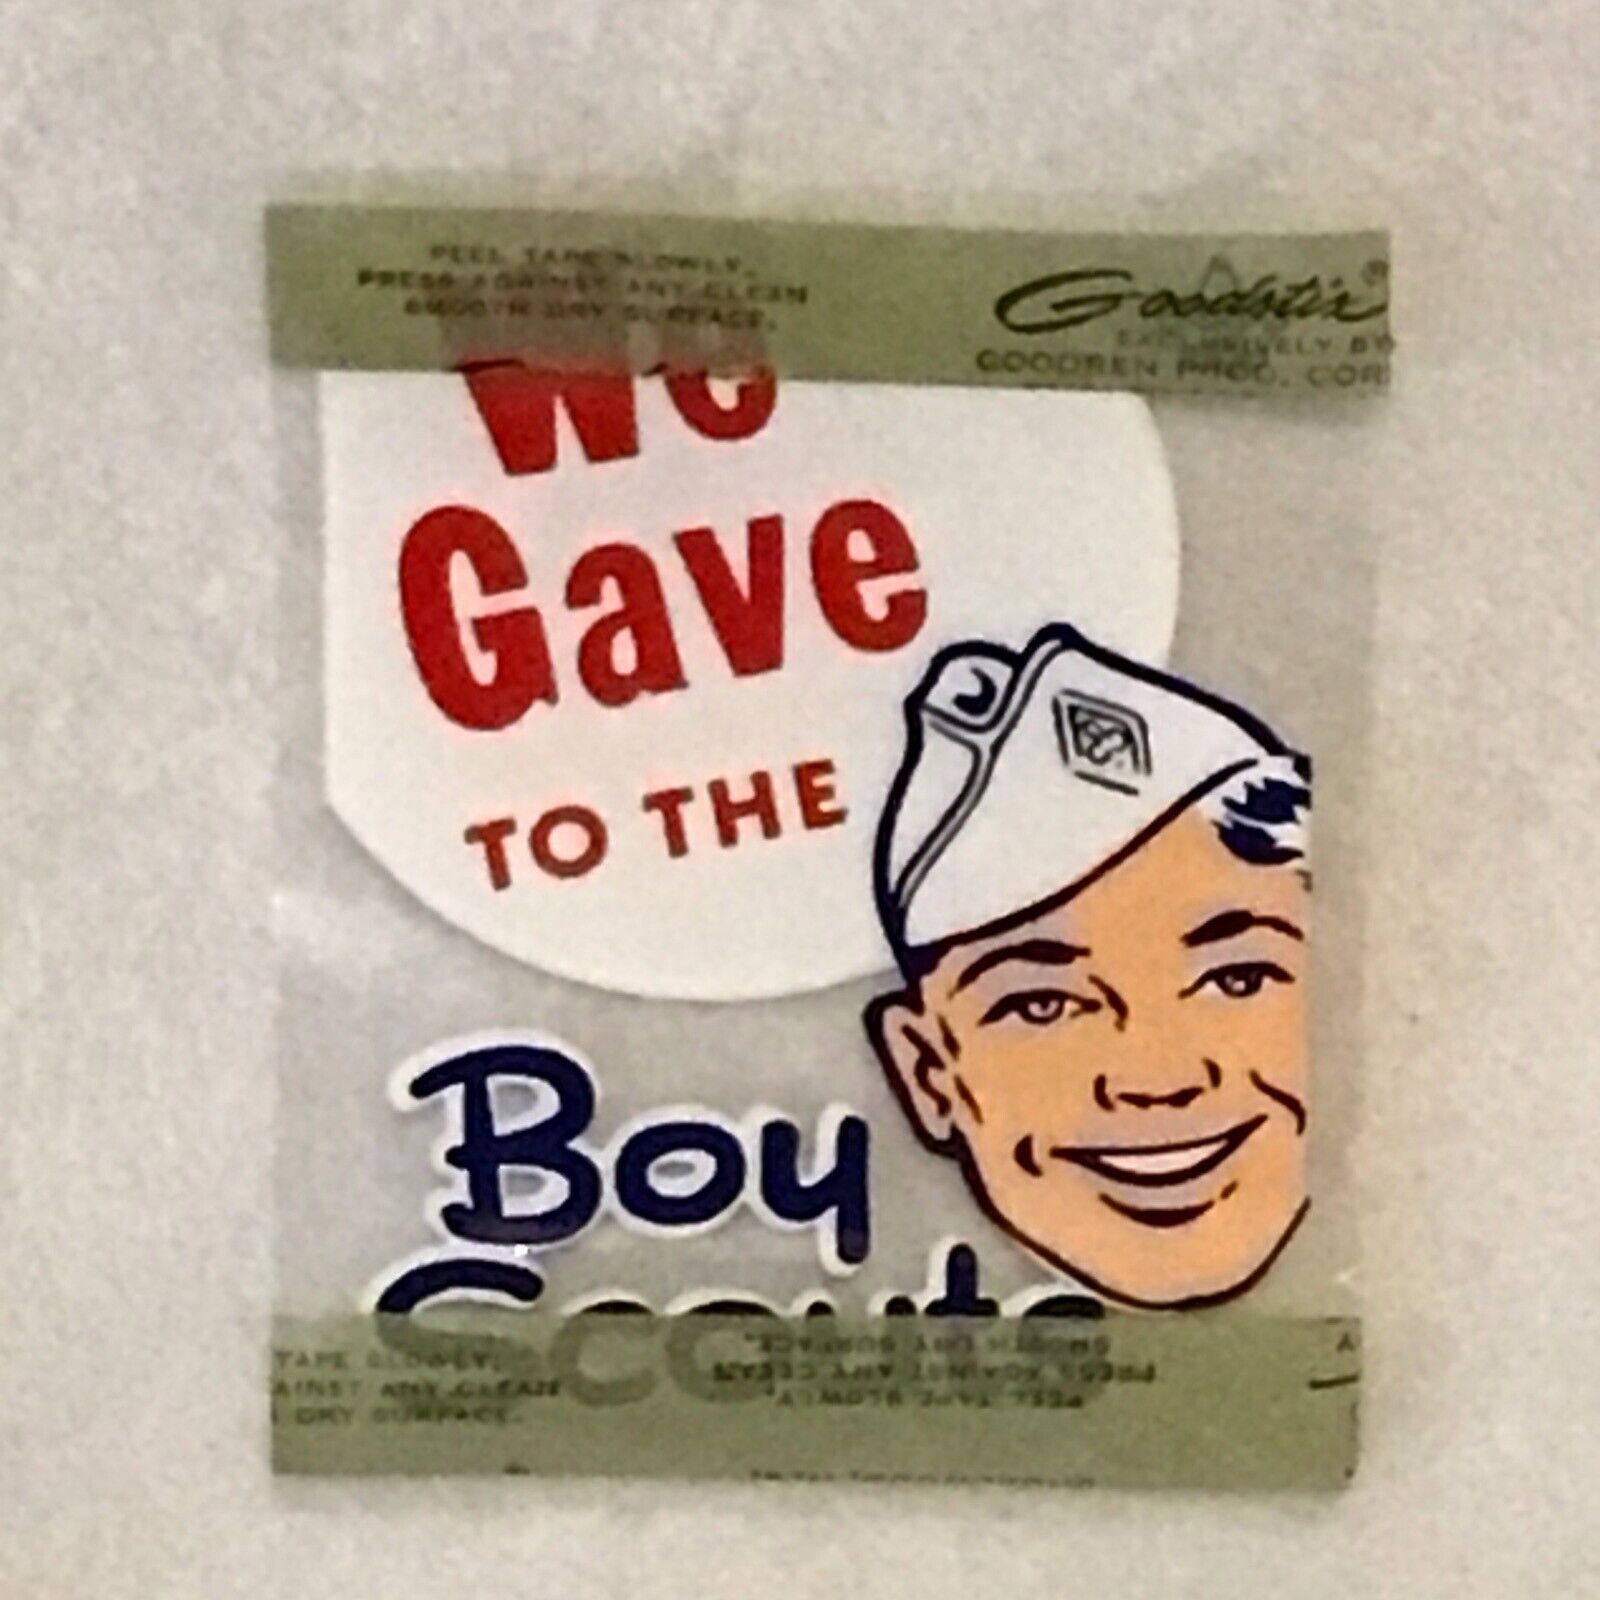 NOS Vintage 50s/60s Gooden Goodstix Prod BSA We Gave To The Boy Scouts Sticker